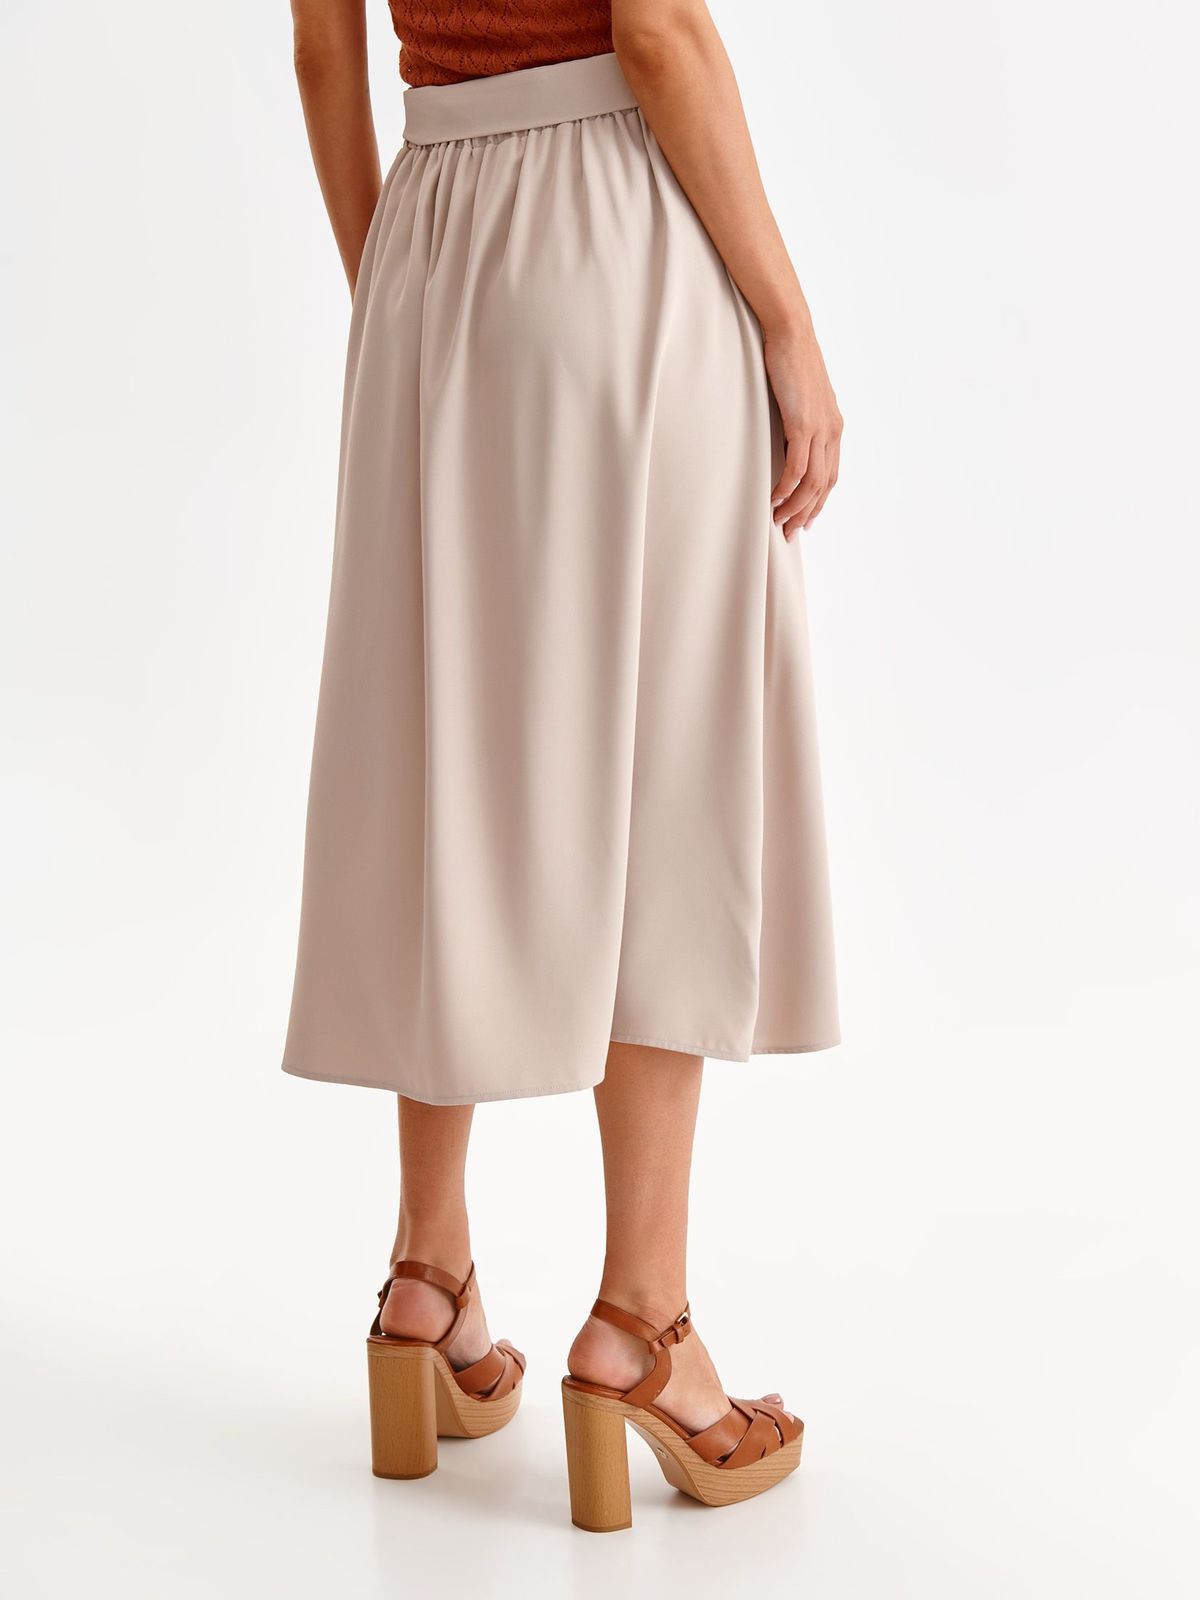 Cream skirt thin fabric midi cloche with elastic waist lateral pockets 2 - StarShinerS.com